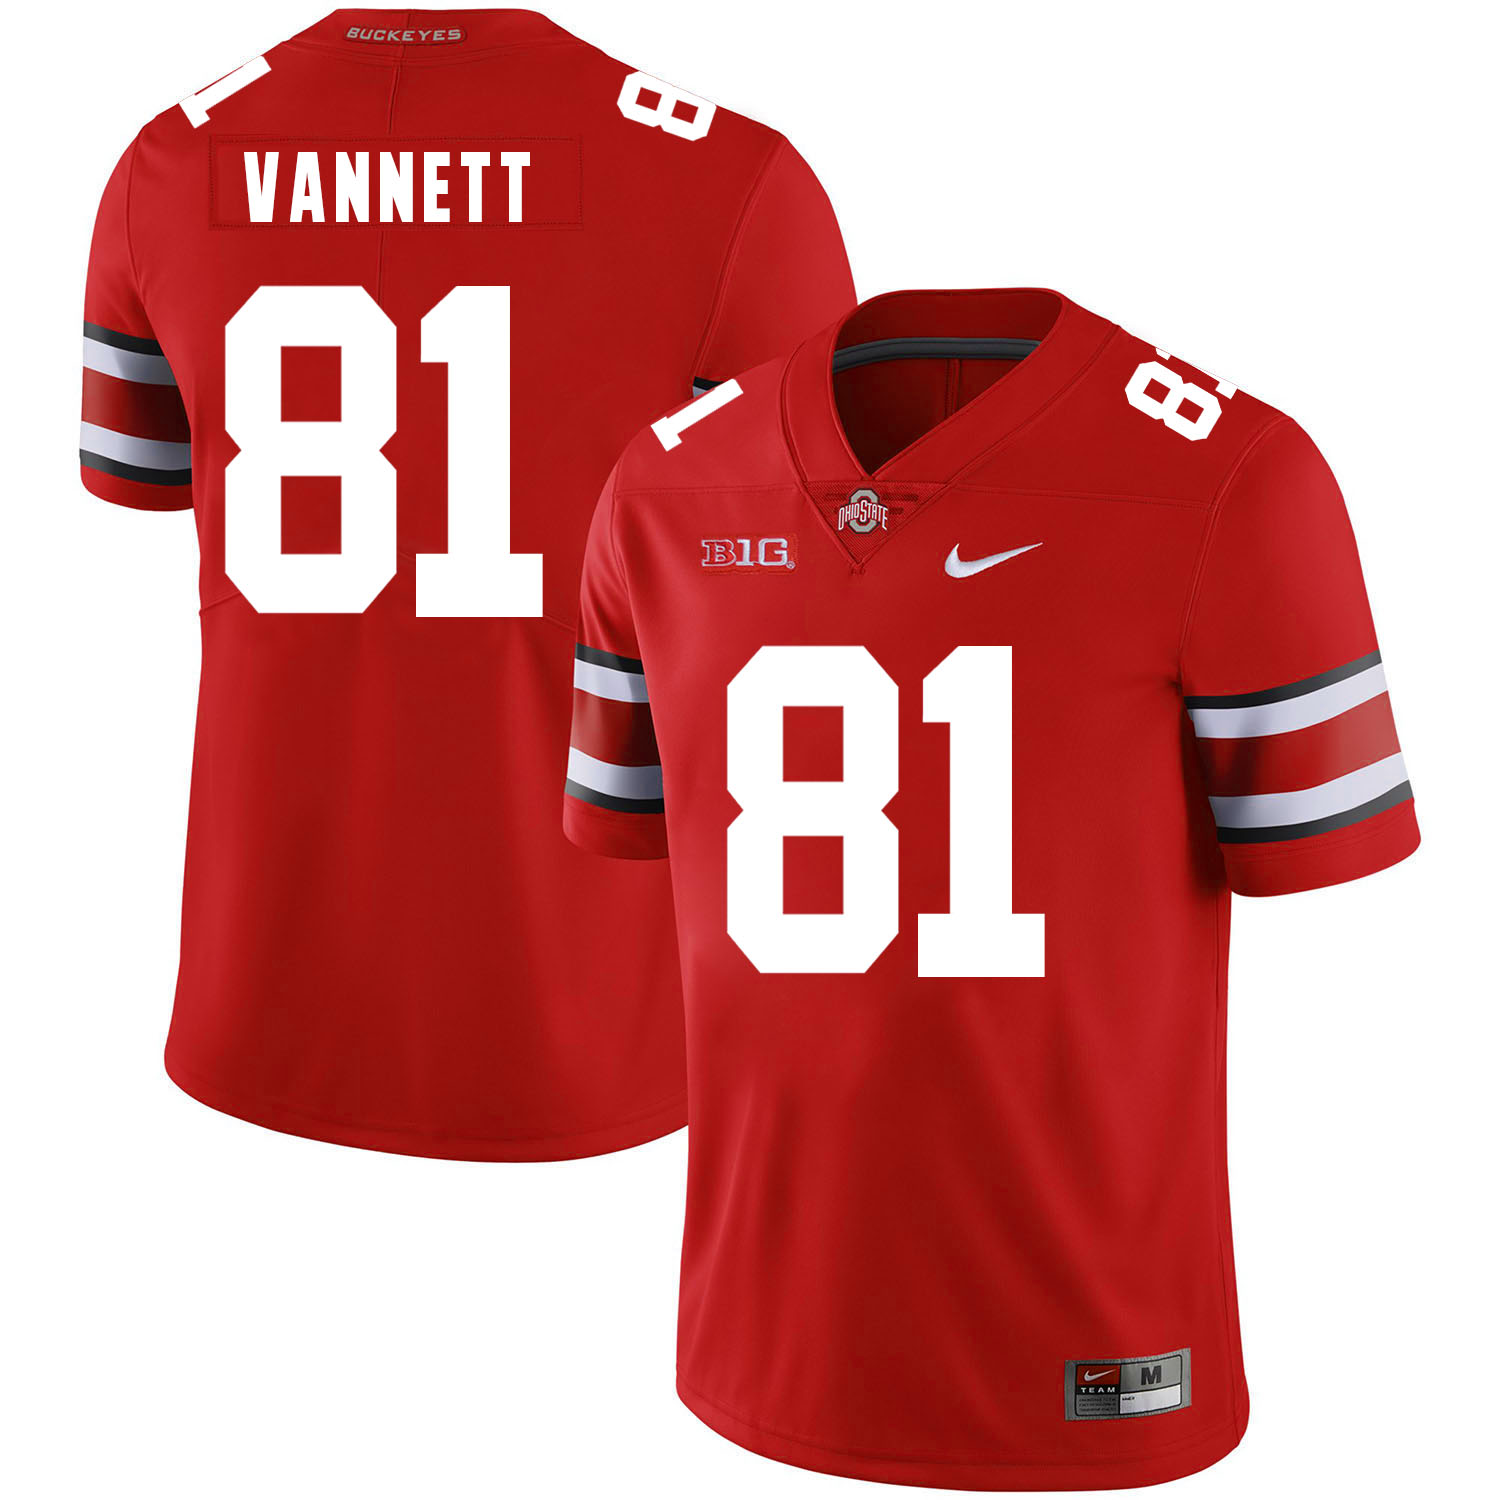 Ohio State Buckeyes 81 Nick Vannett Red Nike College Football Jersey